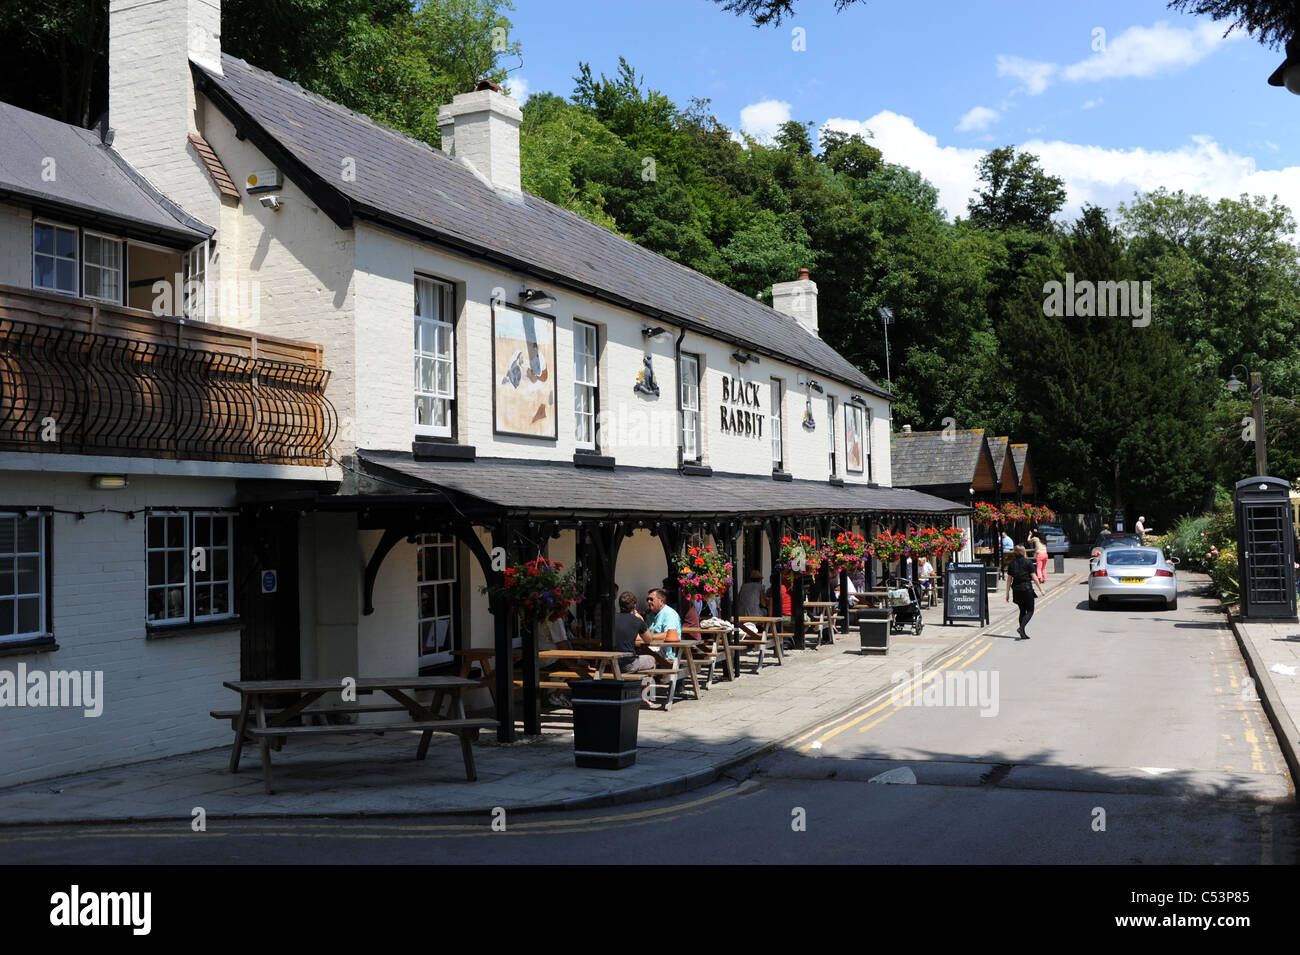 The famous Black Rabbit pub on the River Arun at Arundel UK Stock Photo